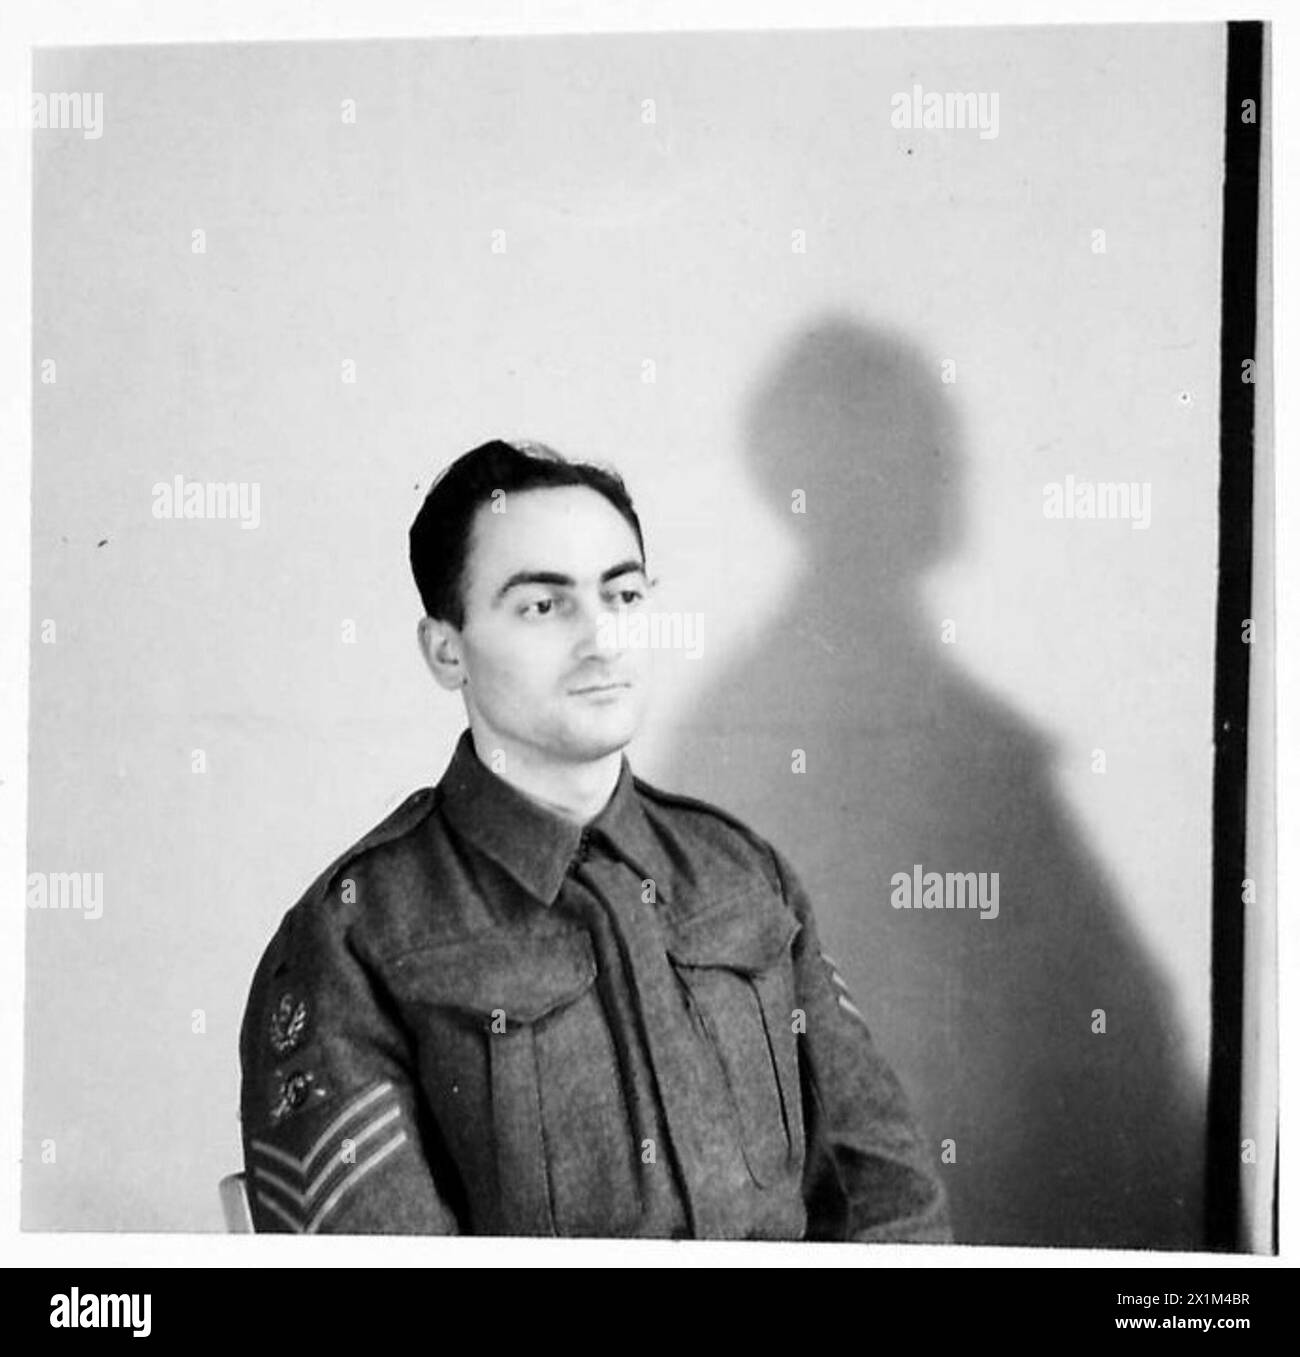 CAMERAMEN NCO PER M.E. - Sgt. Berman, NCO., cameraman per M.e, British Army Foto Stock